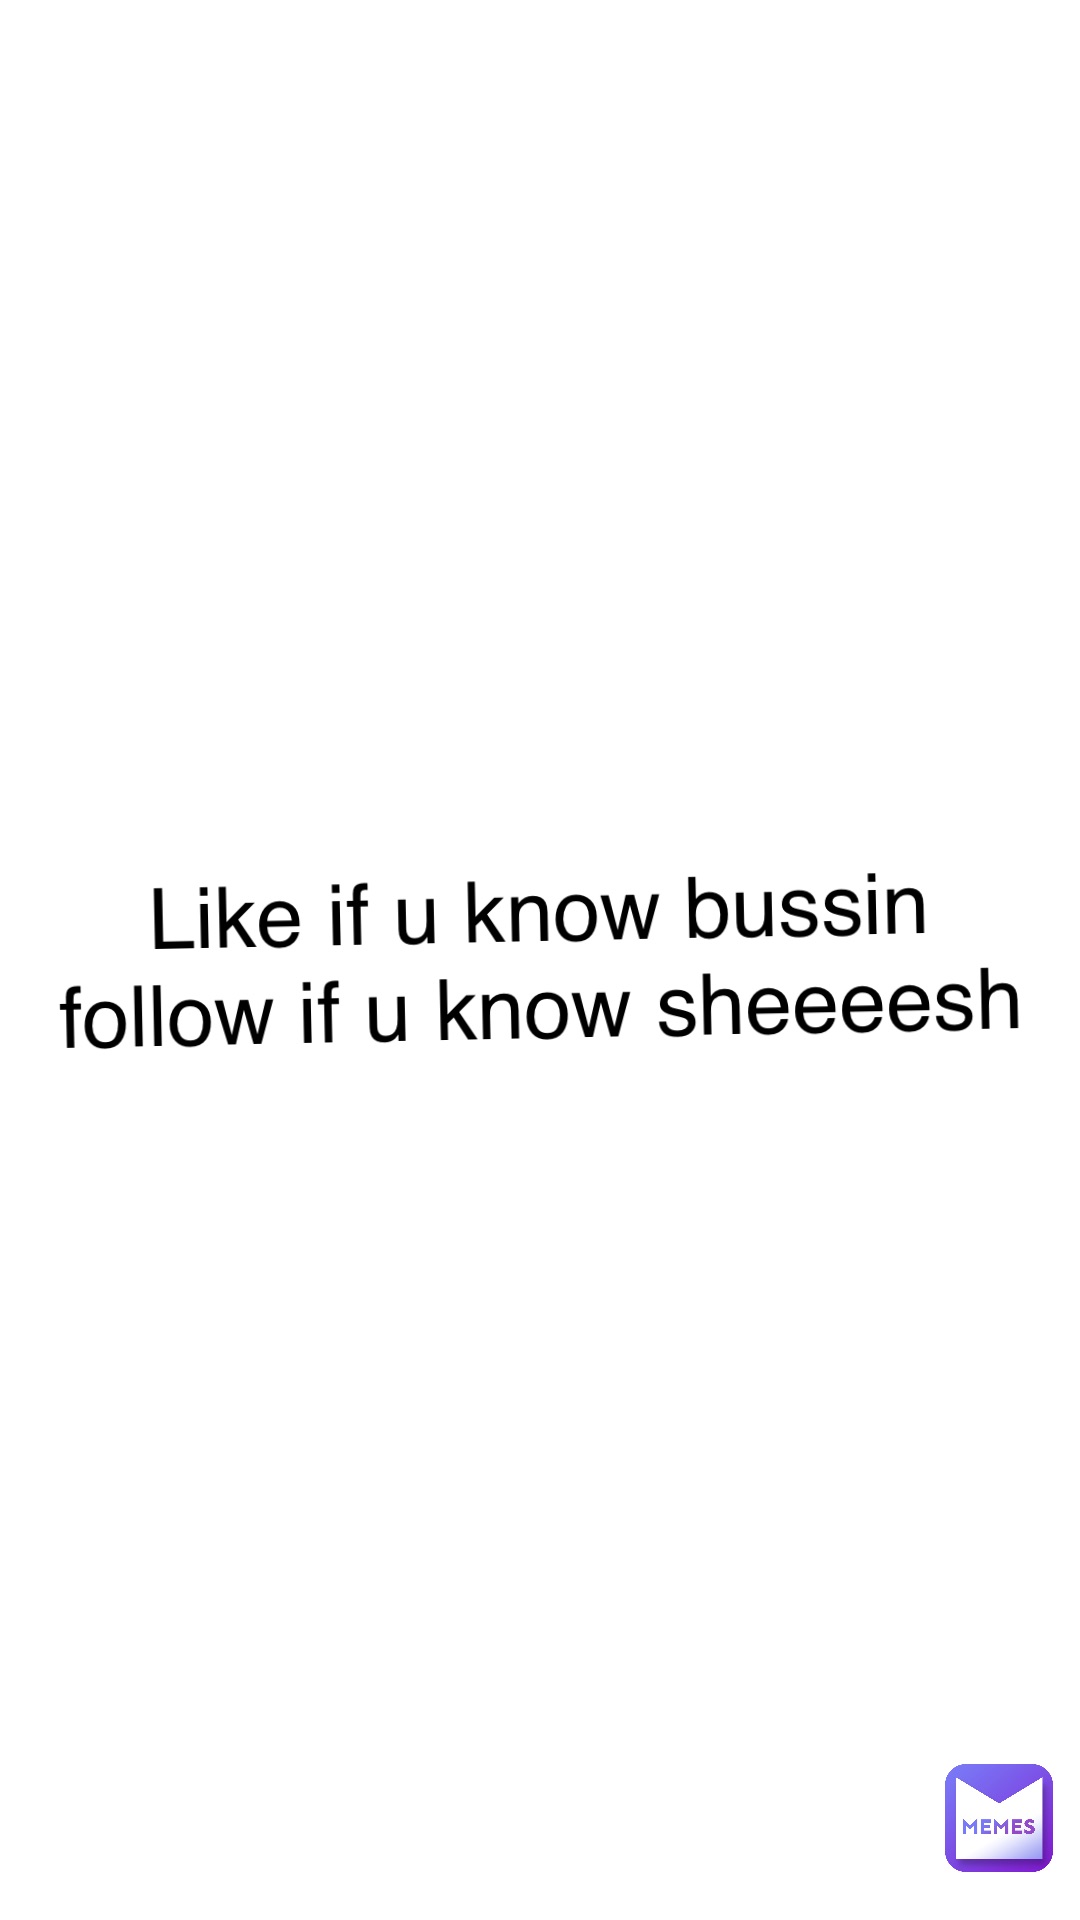 LIKE IF U KNOW BUSSIN
FOLLOW IF U KNOW SHEEEESH